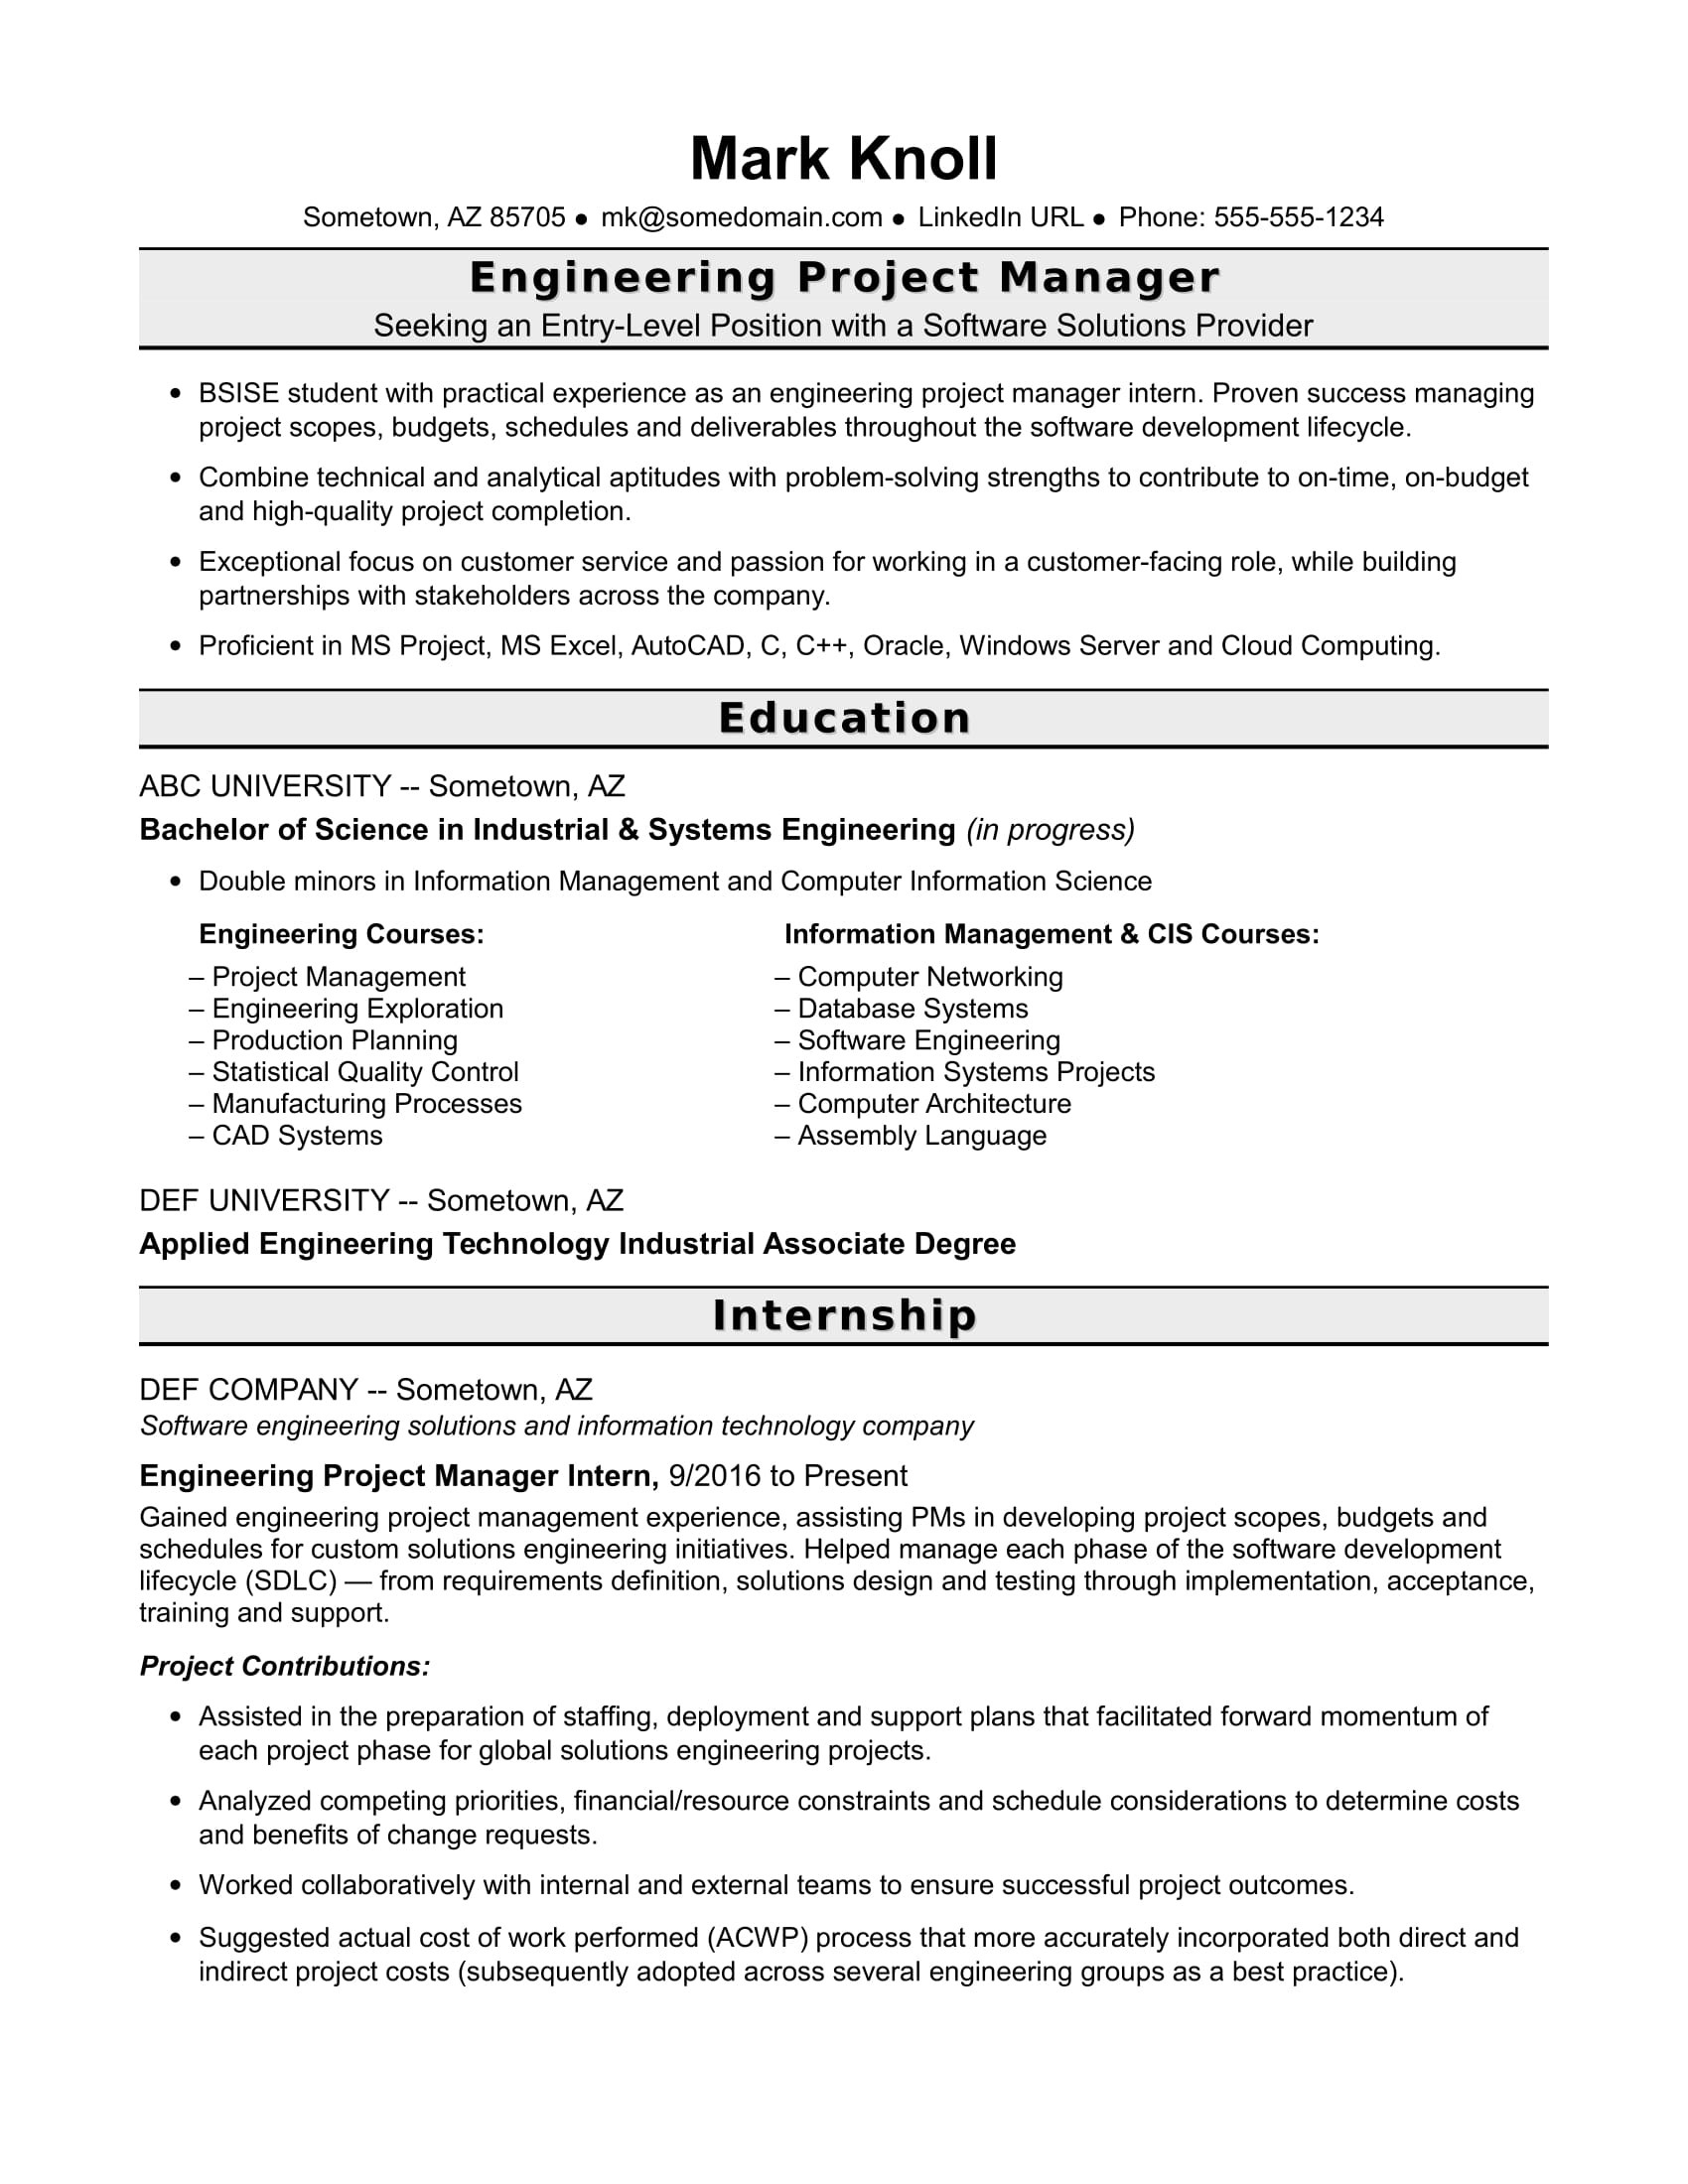 Entry Level Property Management Resume Samples Entry Level Project Manager Resume for Engineers